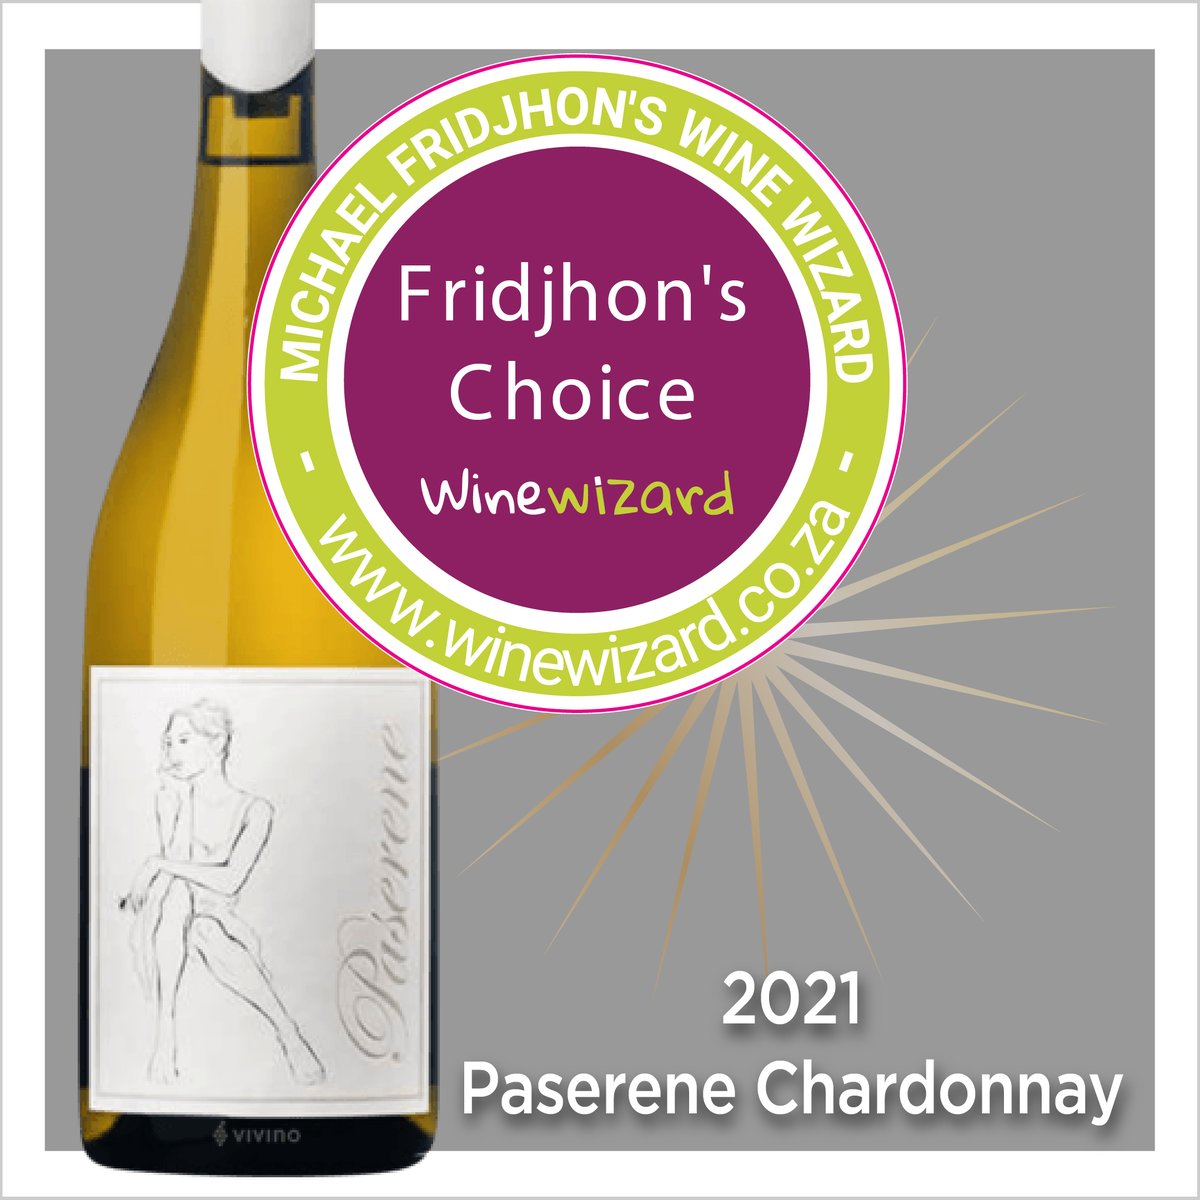 #fridjhonschoice Michael Fridjhon’s wine of the week is 𝐏𝐚𝐬𝐞𝐫𝐞𝐧𝐞 𝐂𝐡𝐚𝐫𝐝𝐨𝐧𝐧𝐚𝐲 𝟐𝟎𝟐𝟏. “𝘋𝘦𝘷𝘦𝘭𝘰𝘱𝘦𝘥, 𝘢𝘭𝘮𝘰𝘴𝘵 𝘩𝘰𝘯𝘦𝘺𝘦𝘥, 𝘣𝘢𝘬𝘦𝘥 𝘢𝘱𝘱𝘭𝘦 𝘢𝘳𝘰𝘮𝘢𝘴” Find it at winewizard.co.za/wine/9817 @Paserenewine